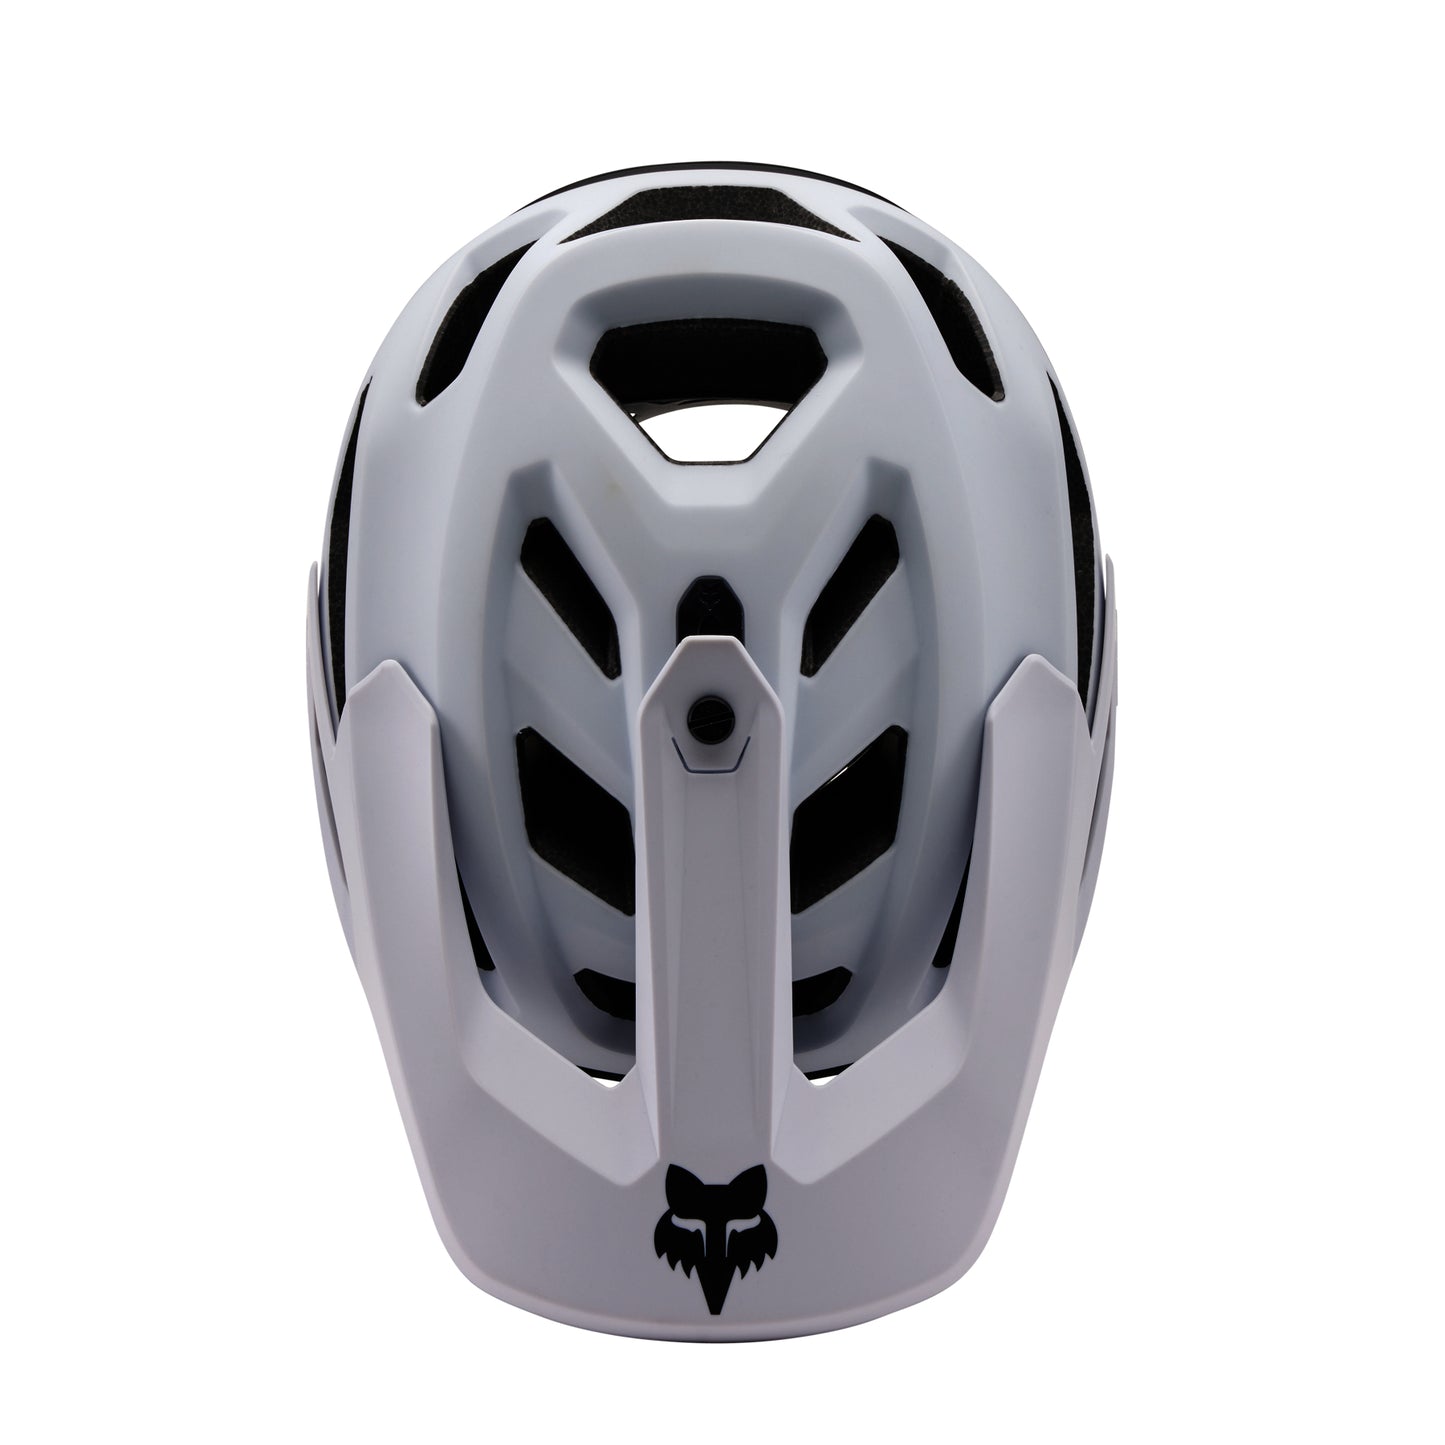 Fox Dropframe Pro MIPS Helmet - L - NYF Black - White